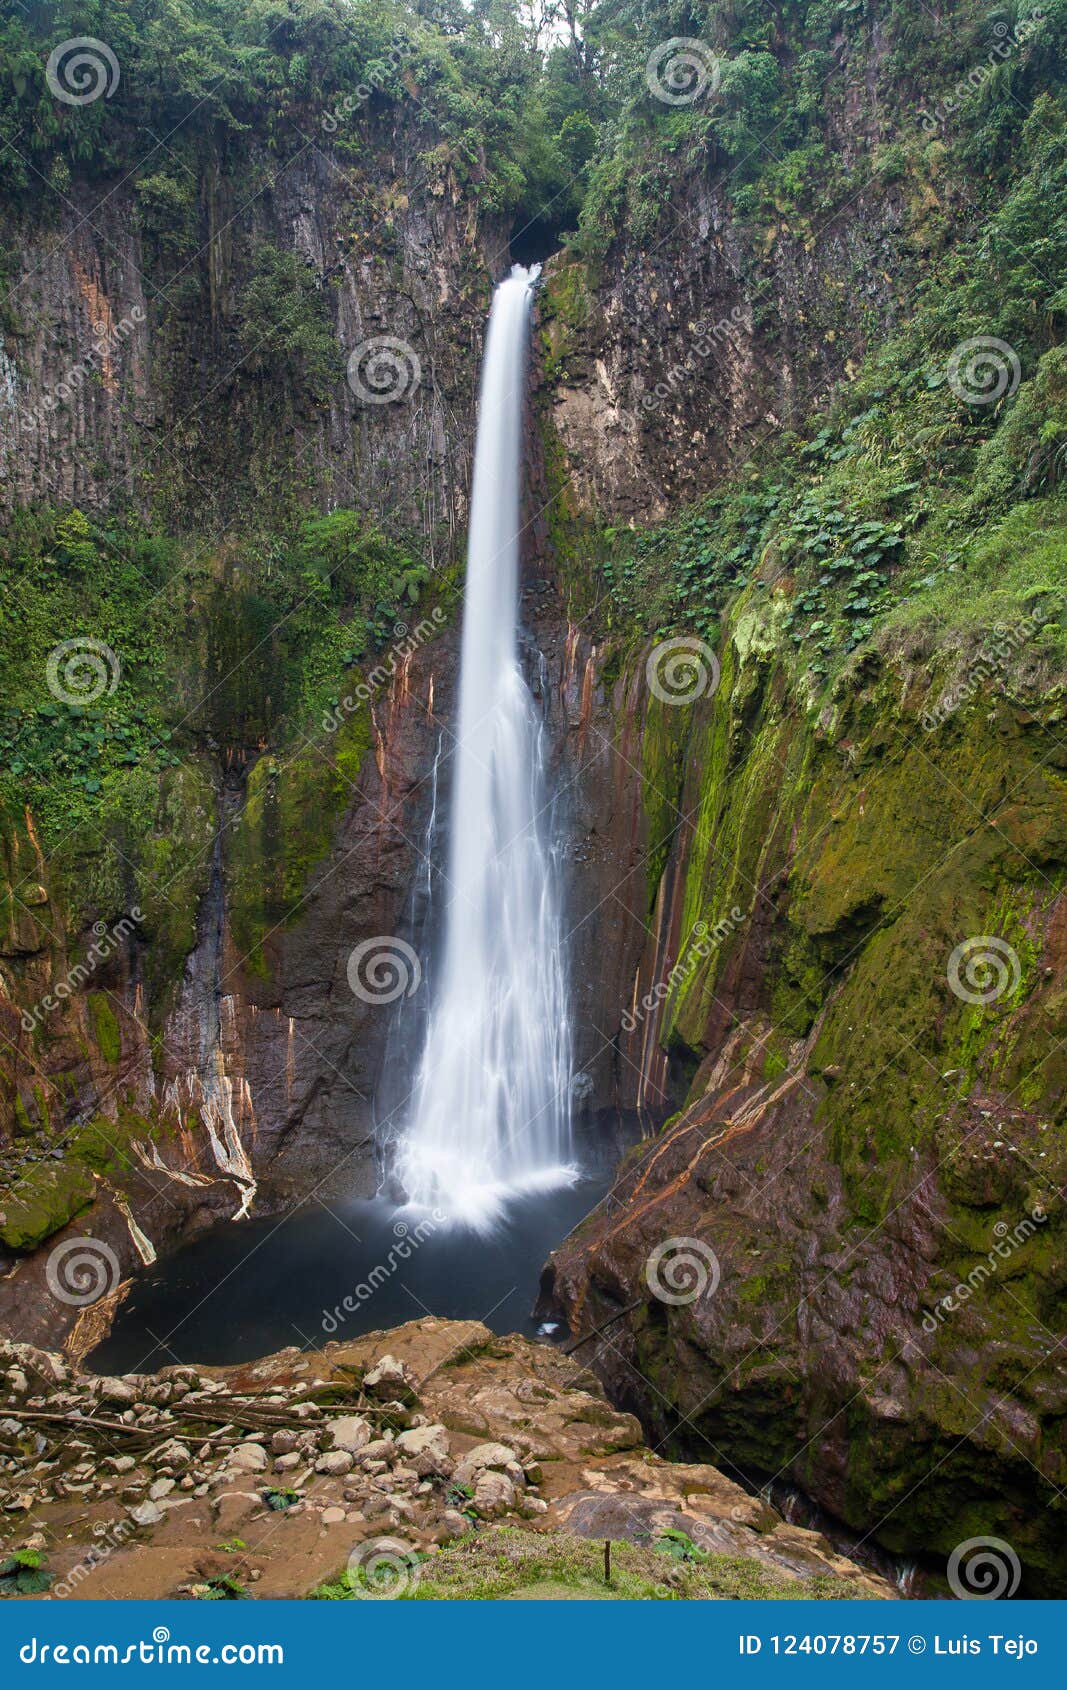 del toro waterfall in alajuela, costa rica